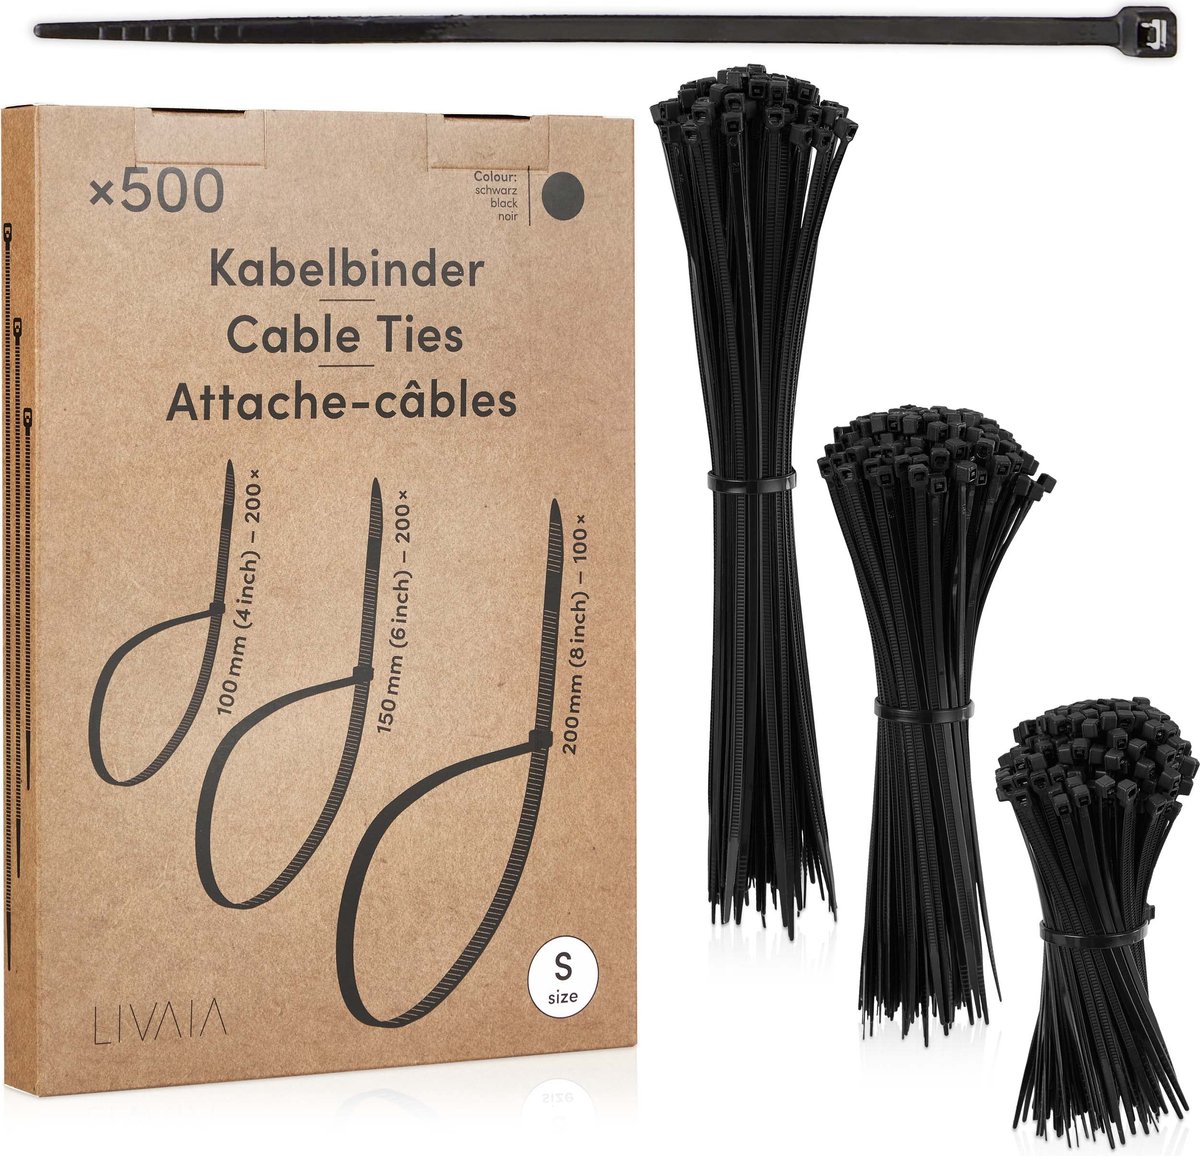 Kabelbinderset zwart: 500 kleine kabelbinders in 3 maten - Kabelorganizer, Kabelmanagement - Kabelbinders zwart 100mm, 150mm, 200mm - LIVAIA